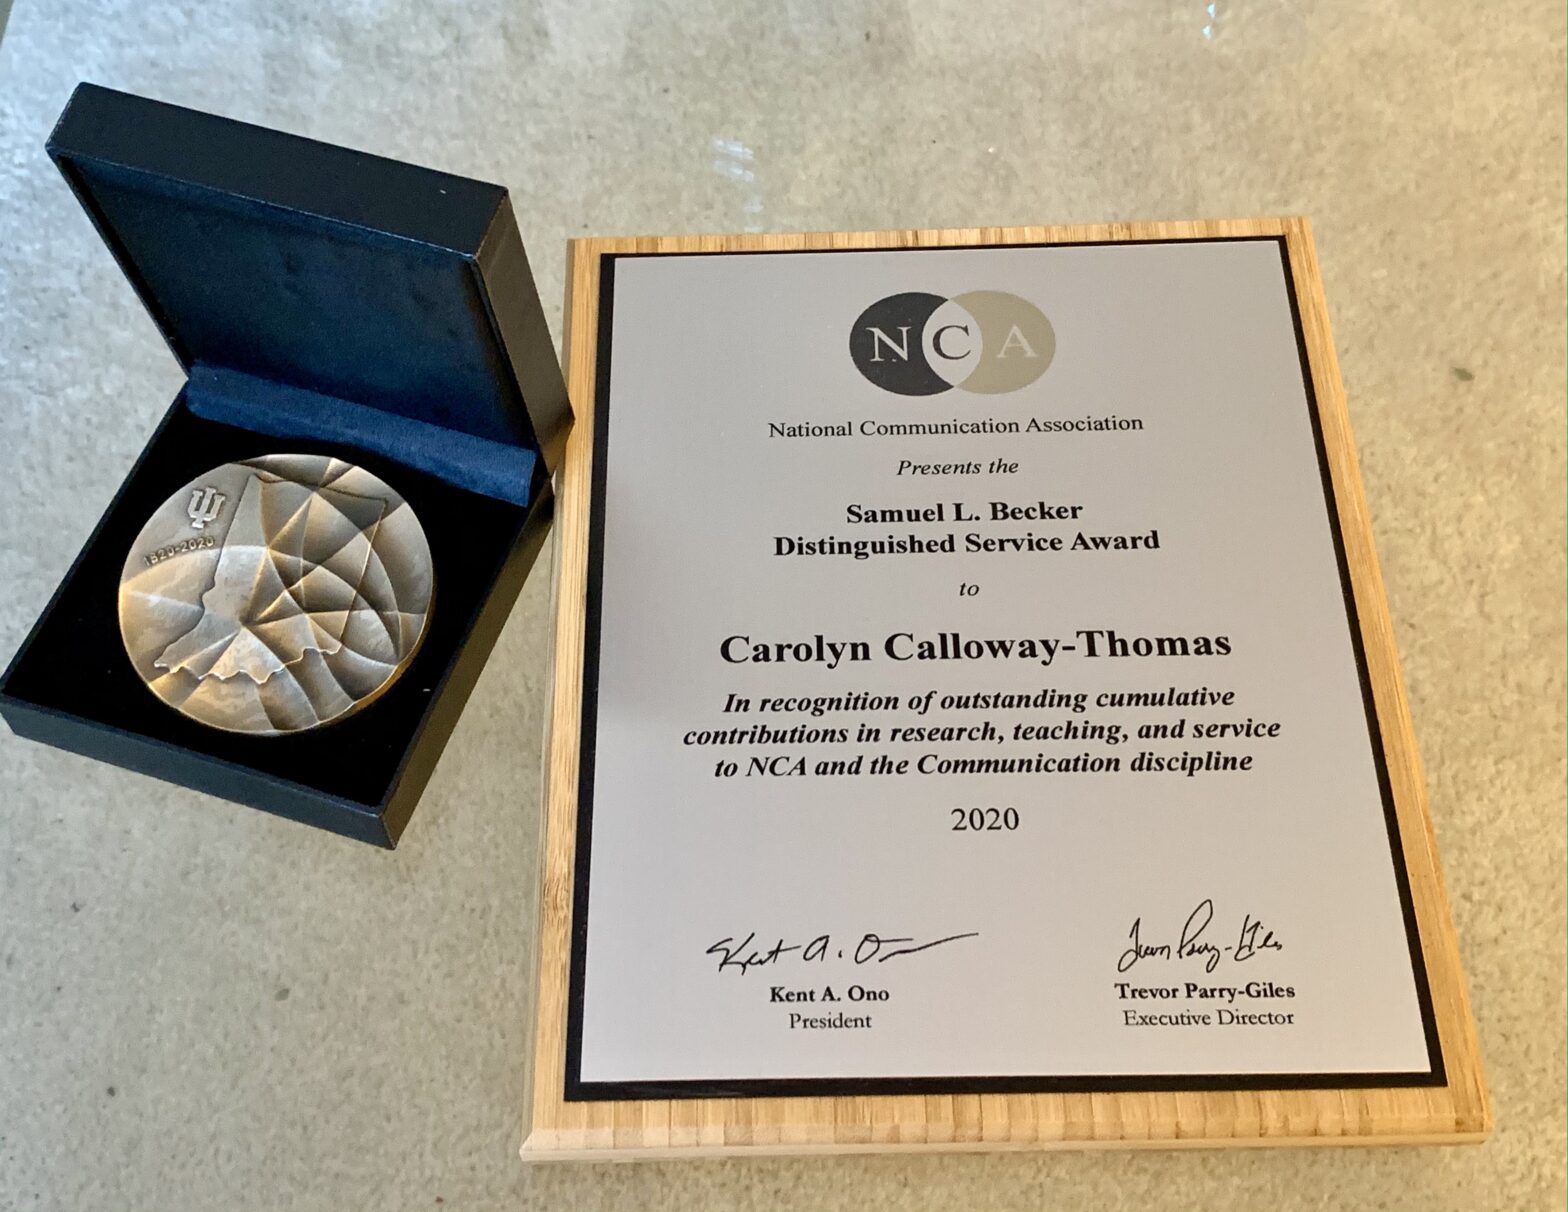 Professor Carolyn Calloway-Thomas Receives Award From National Communication Association & Indiana University